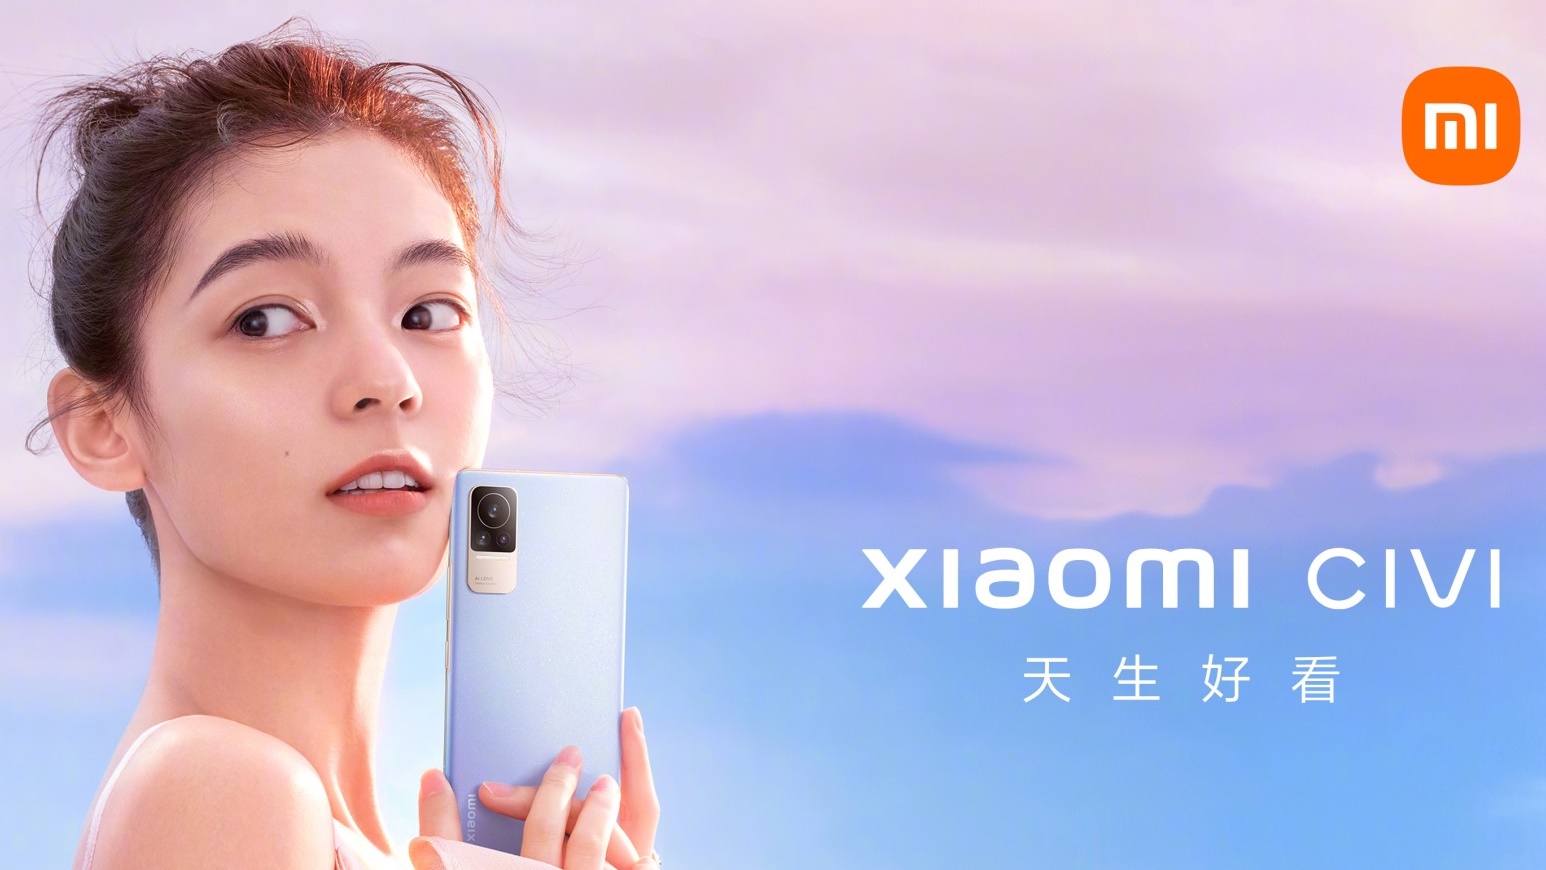 Xiaomi civi price malaysia